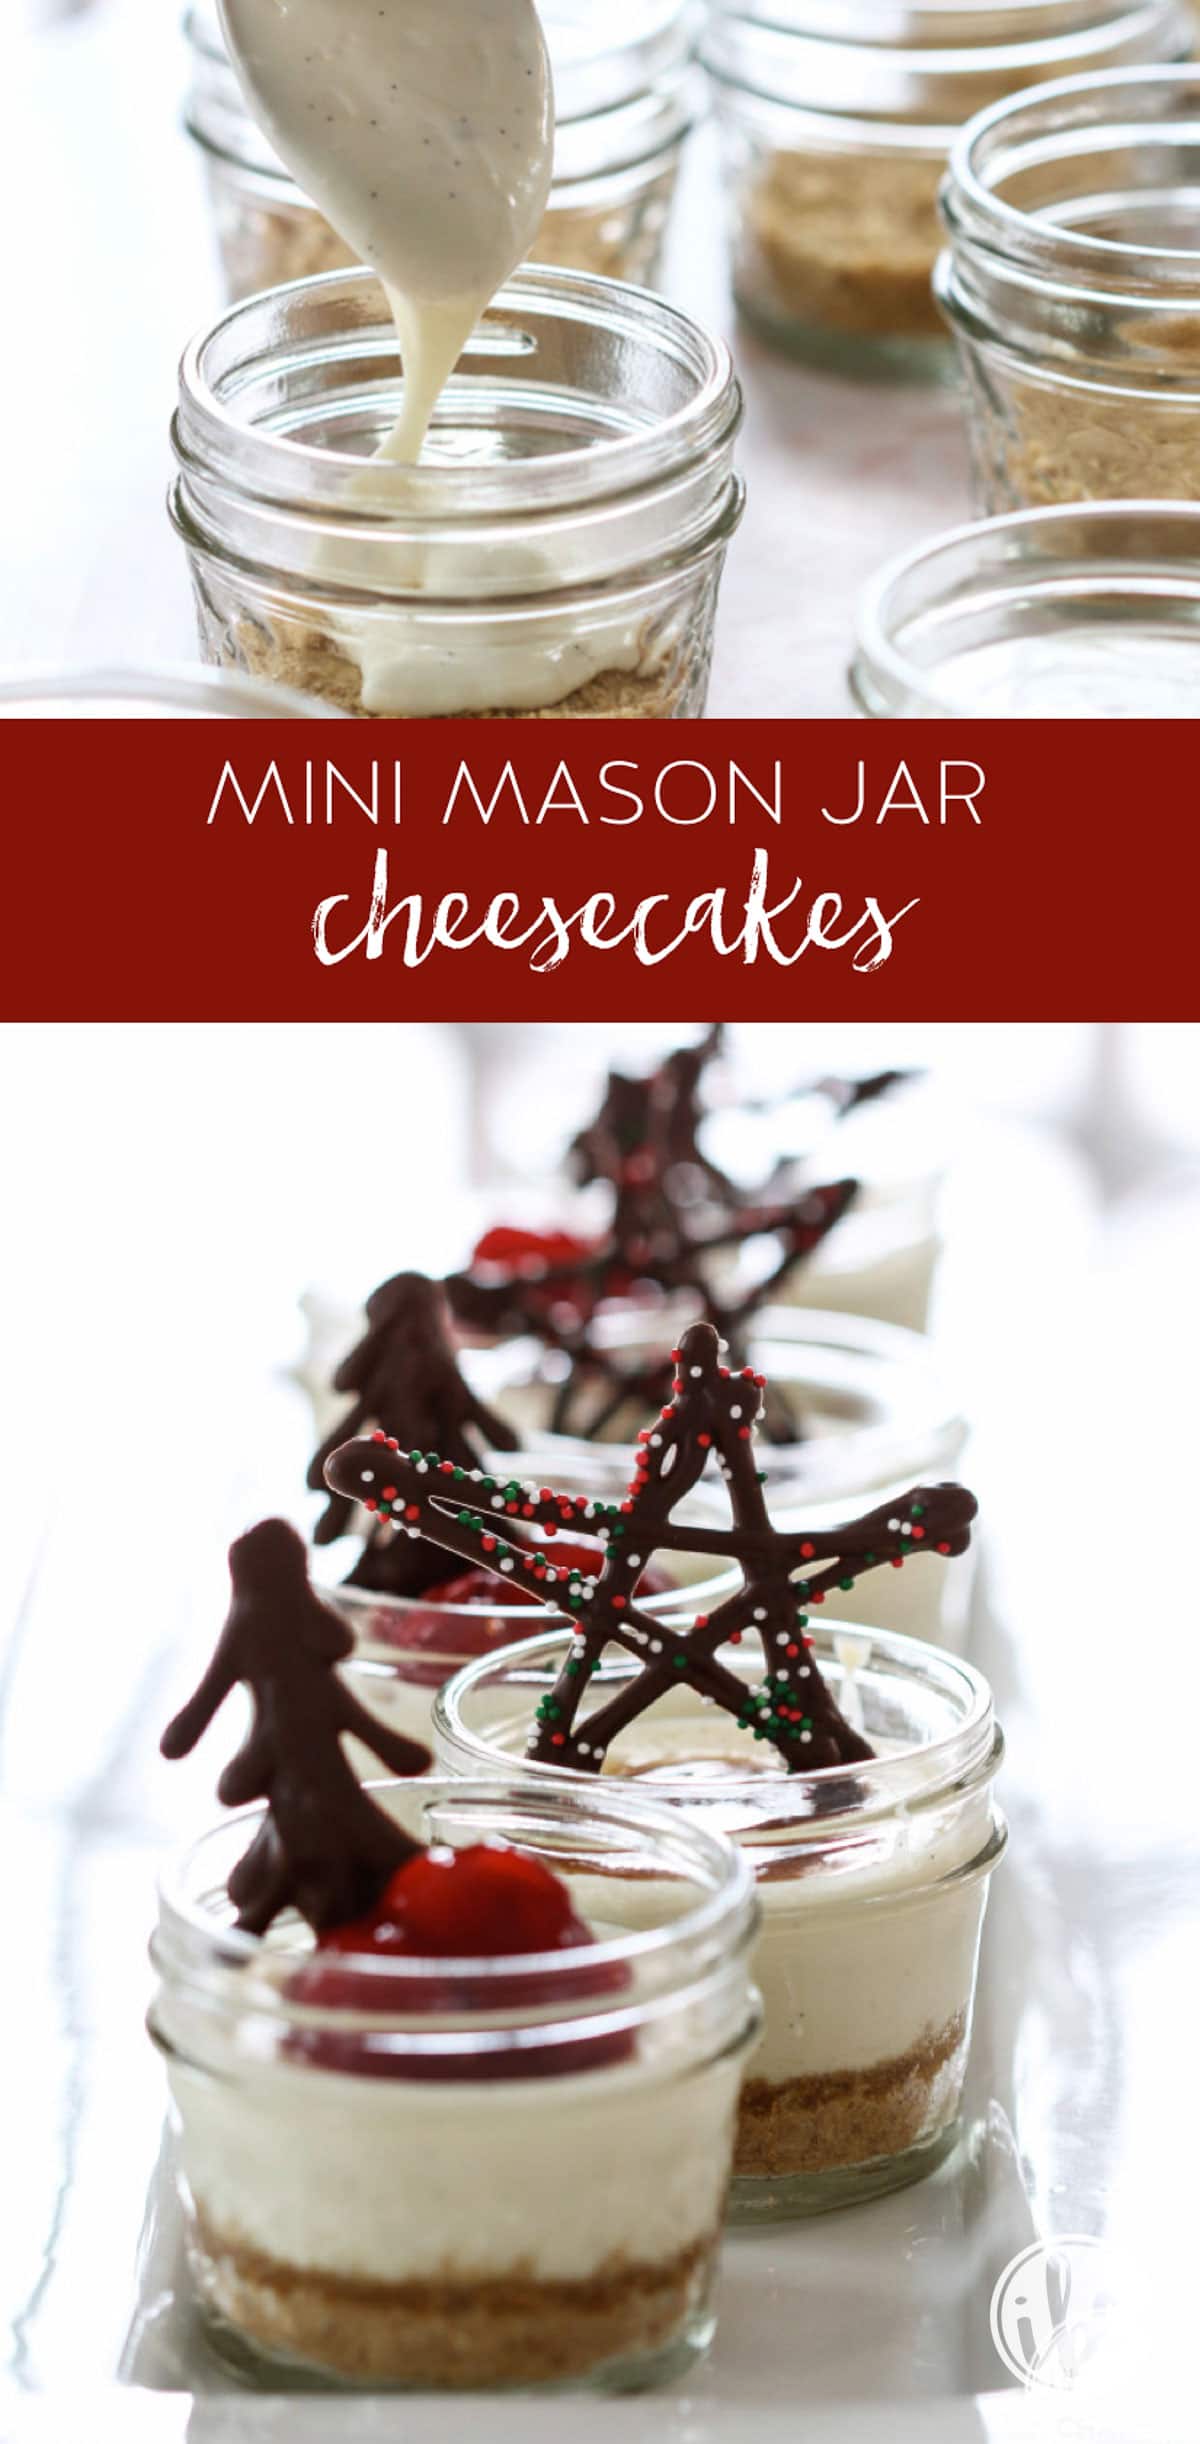 Mini Mason Jar Cheesecakes make a delicious holiday appetizer recipe! #masonjar #cheesecake #christmas #holiday #mini #dessert #recipe